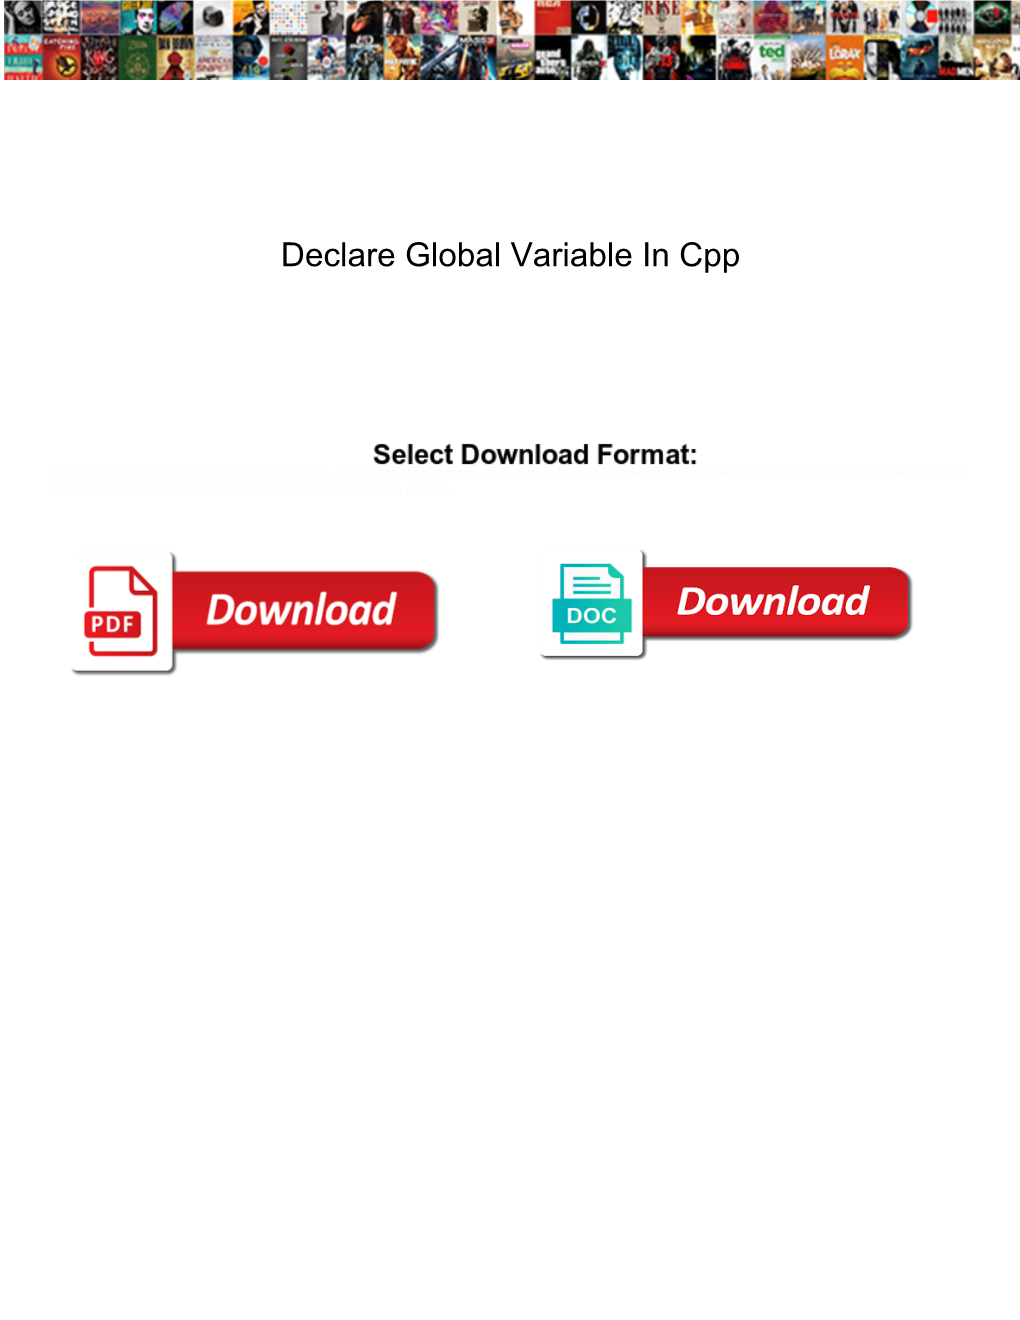 Declare Global Variable in Cpp